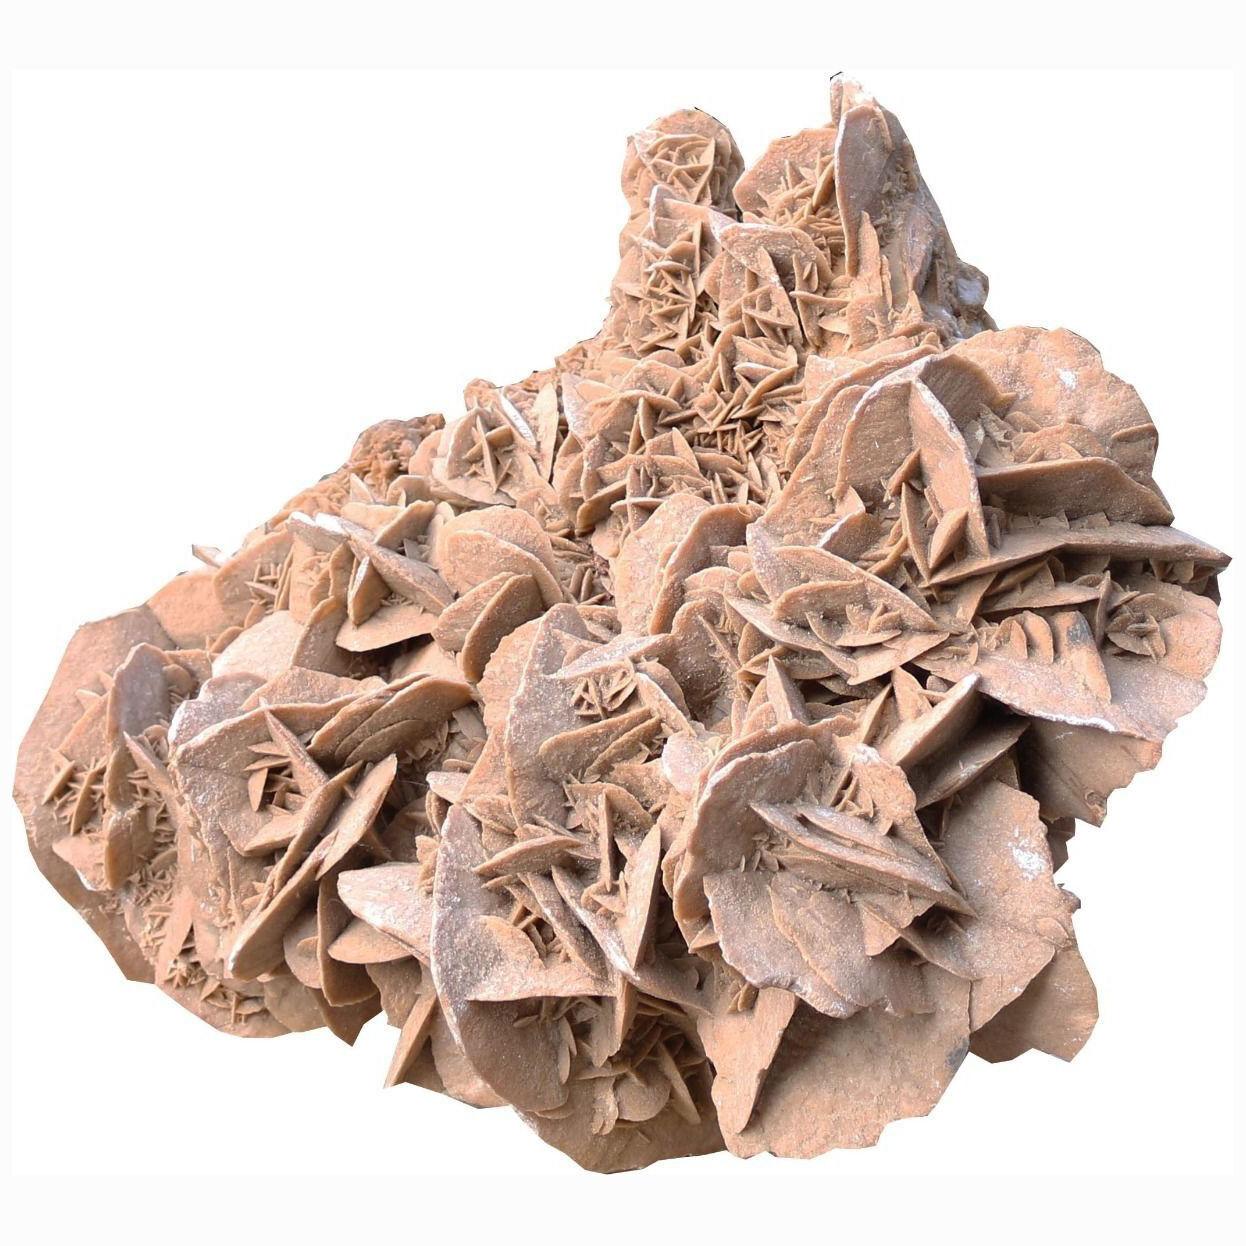 A Large ‘Desert Rose’ Selenite Crystal Formation